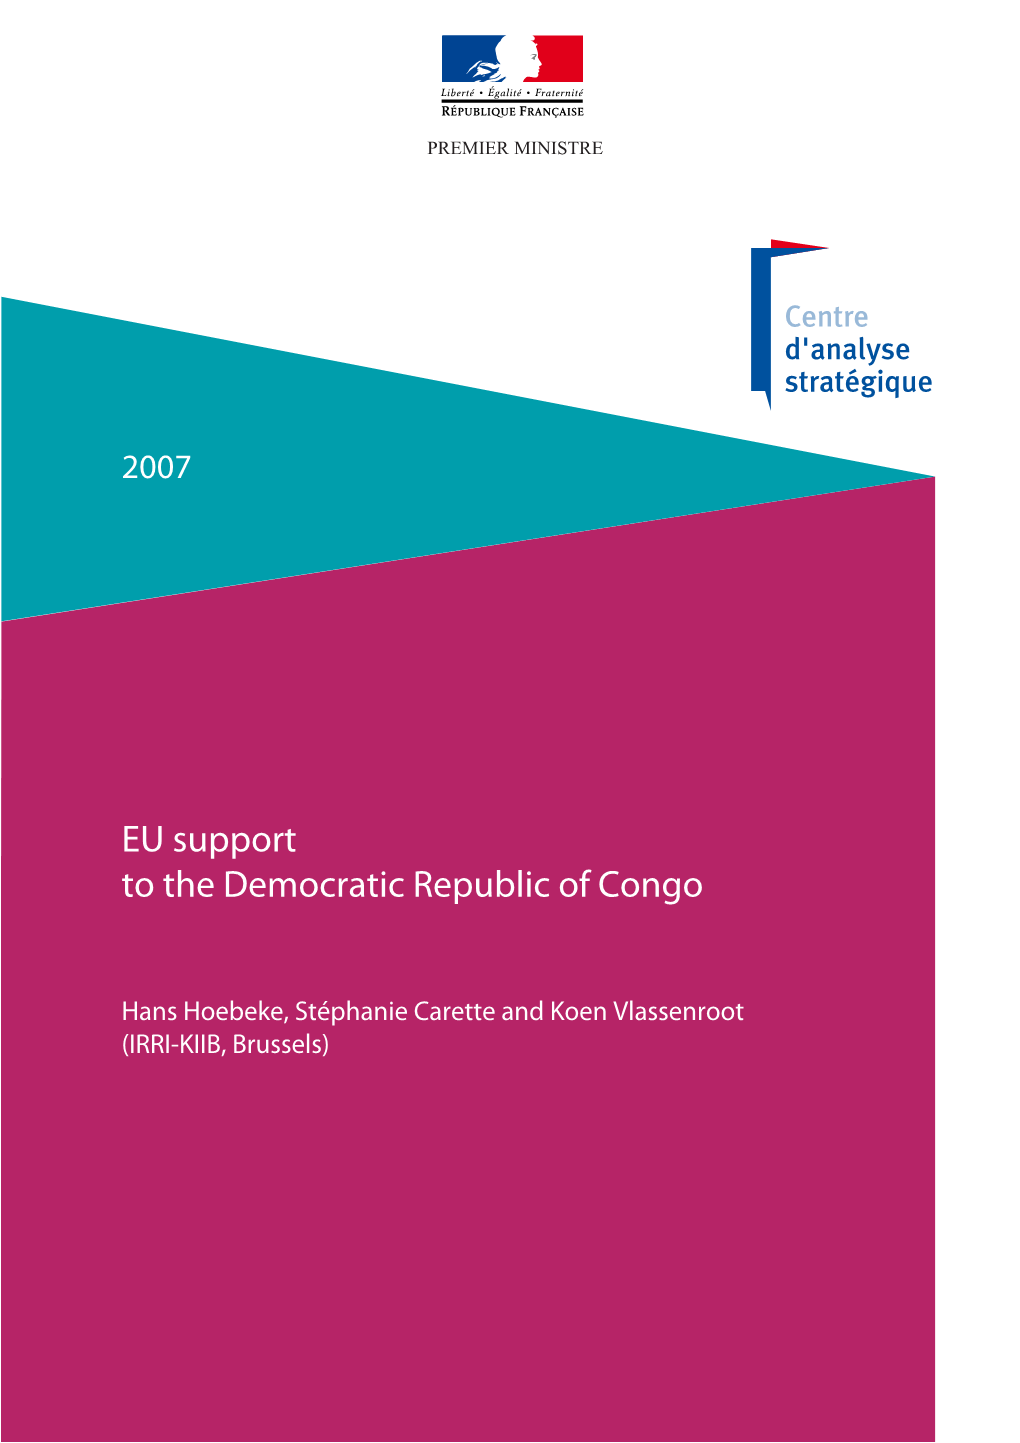 EU Support to the Democratic Republic of Congo